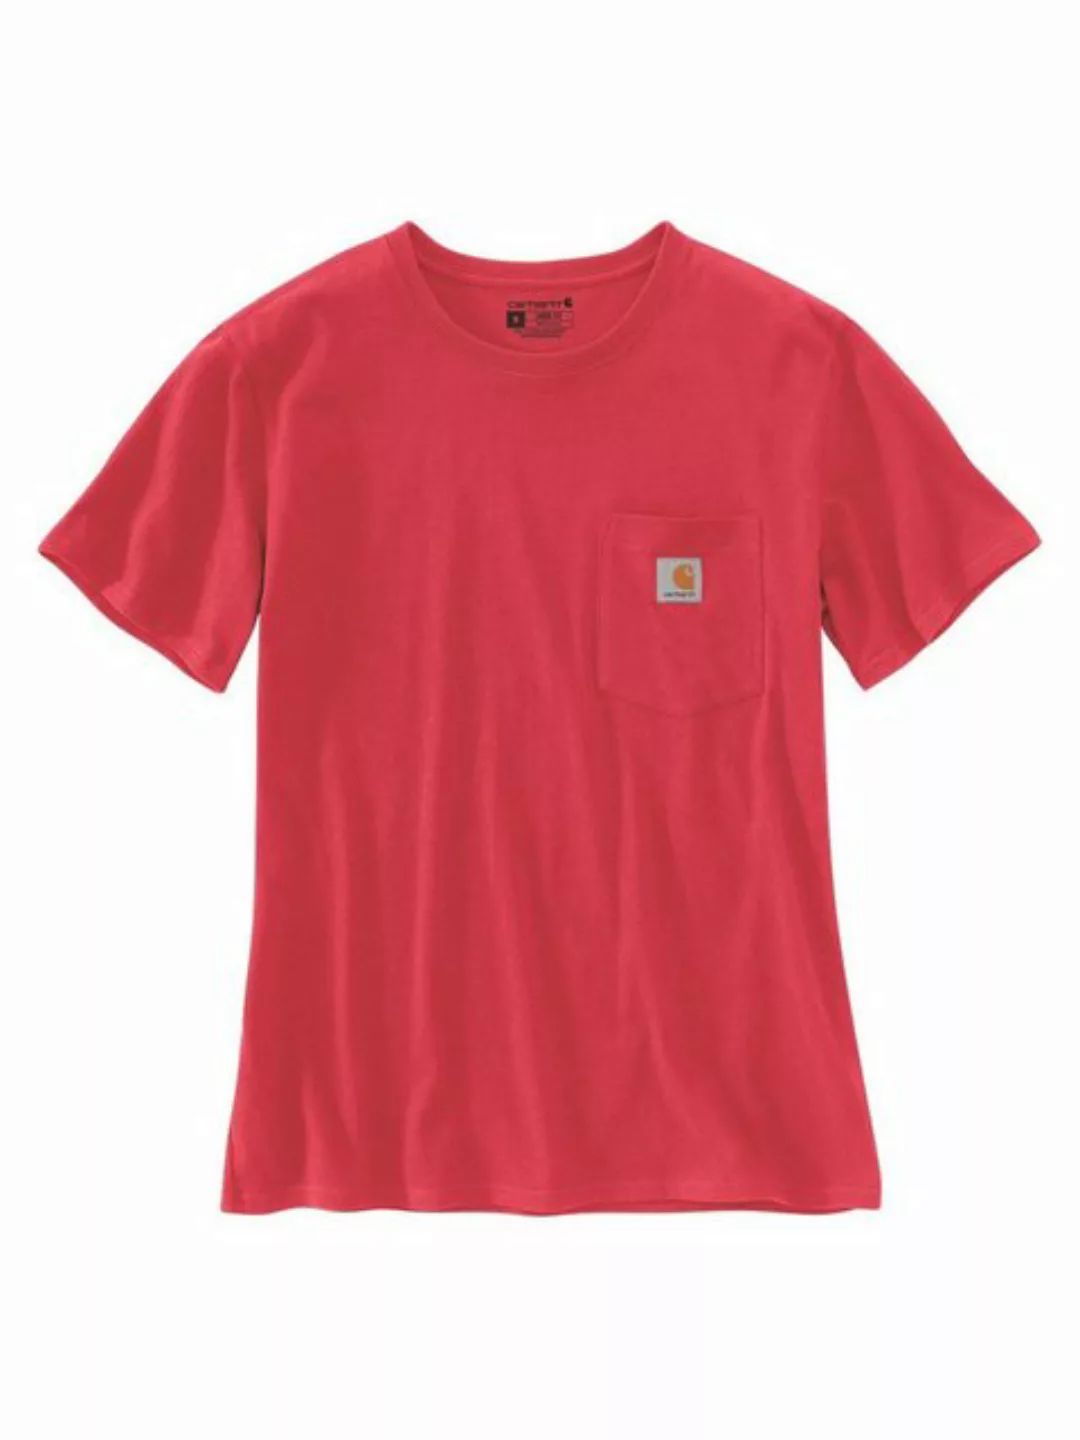 Carhartt T-Shirt 103067-R85 Carhartt Pocket günstig online kaufen